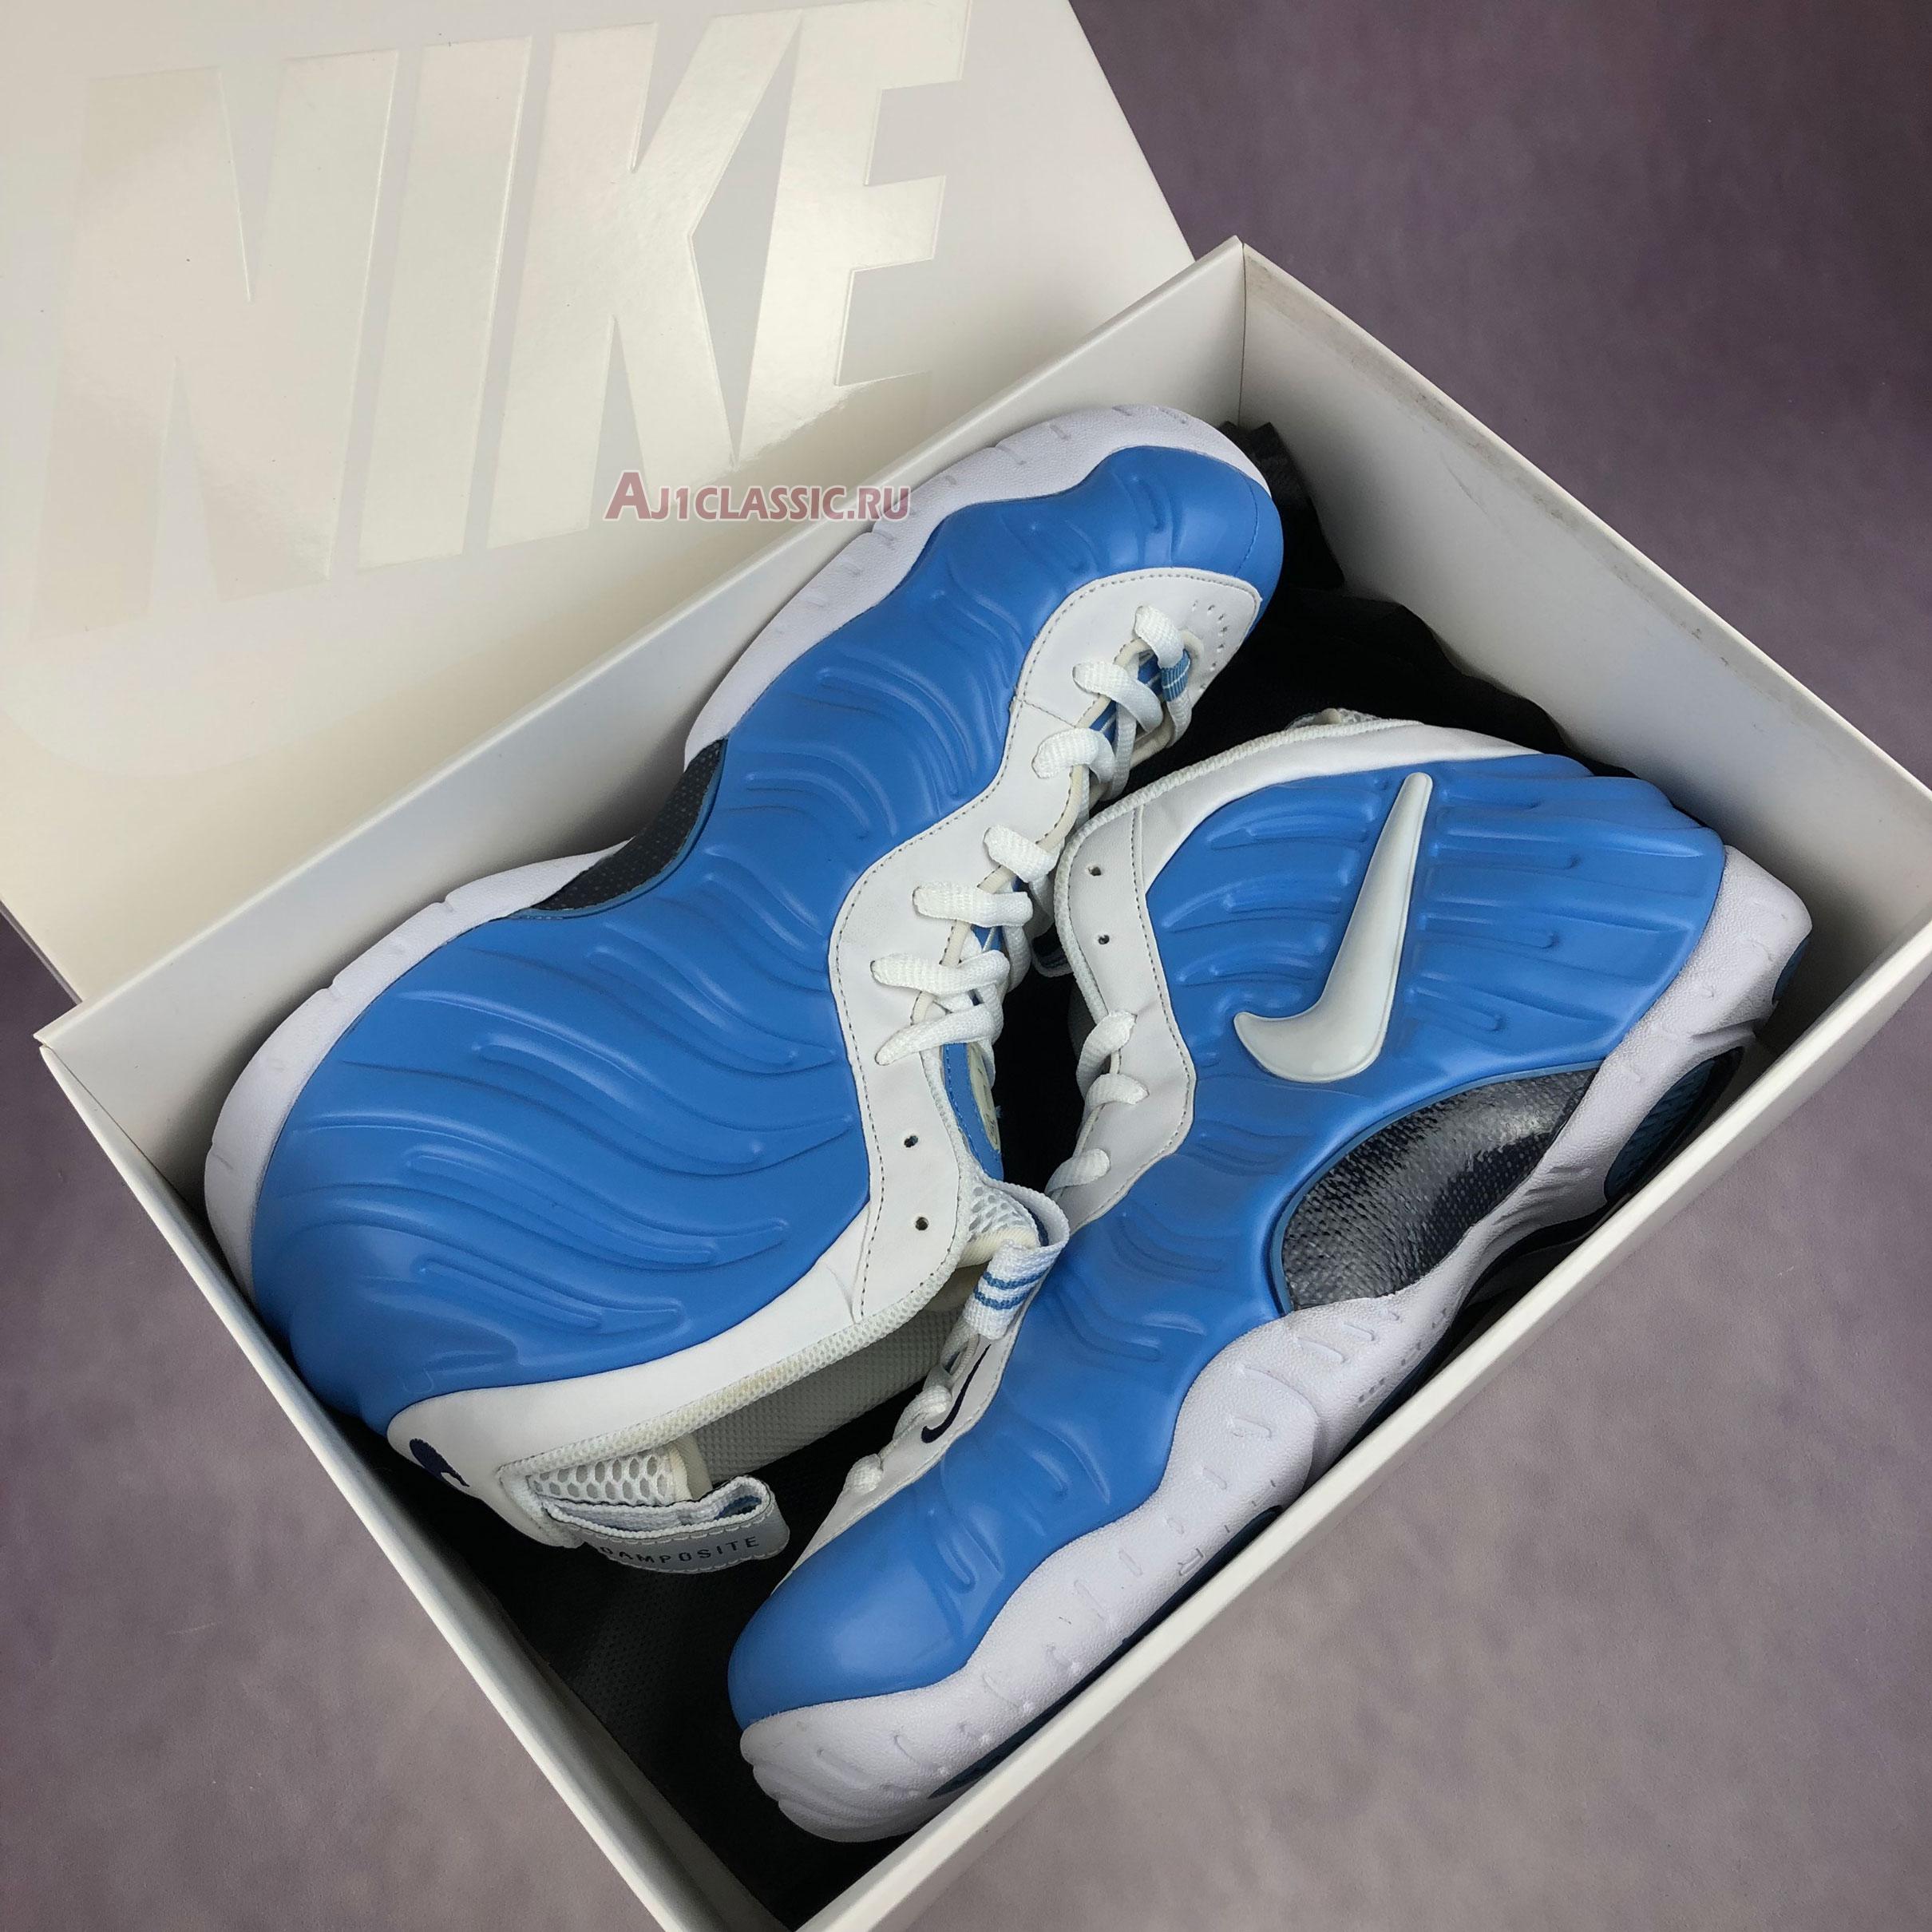 Nike Air Foamposite Pro University Blue 624041-411 University Blue/White-Midnight Navy Sneakers